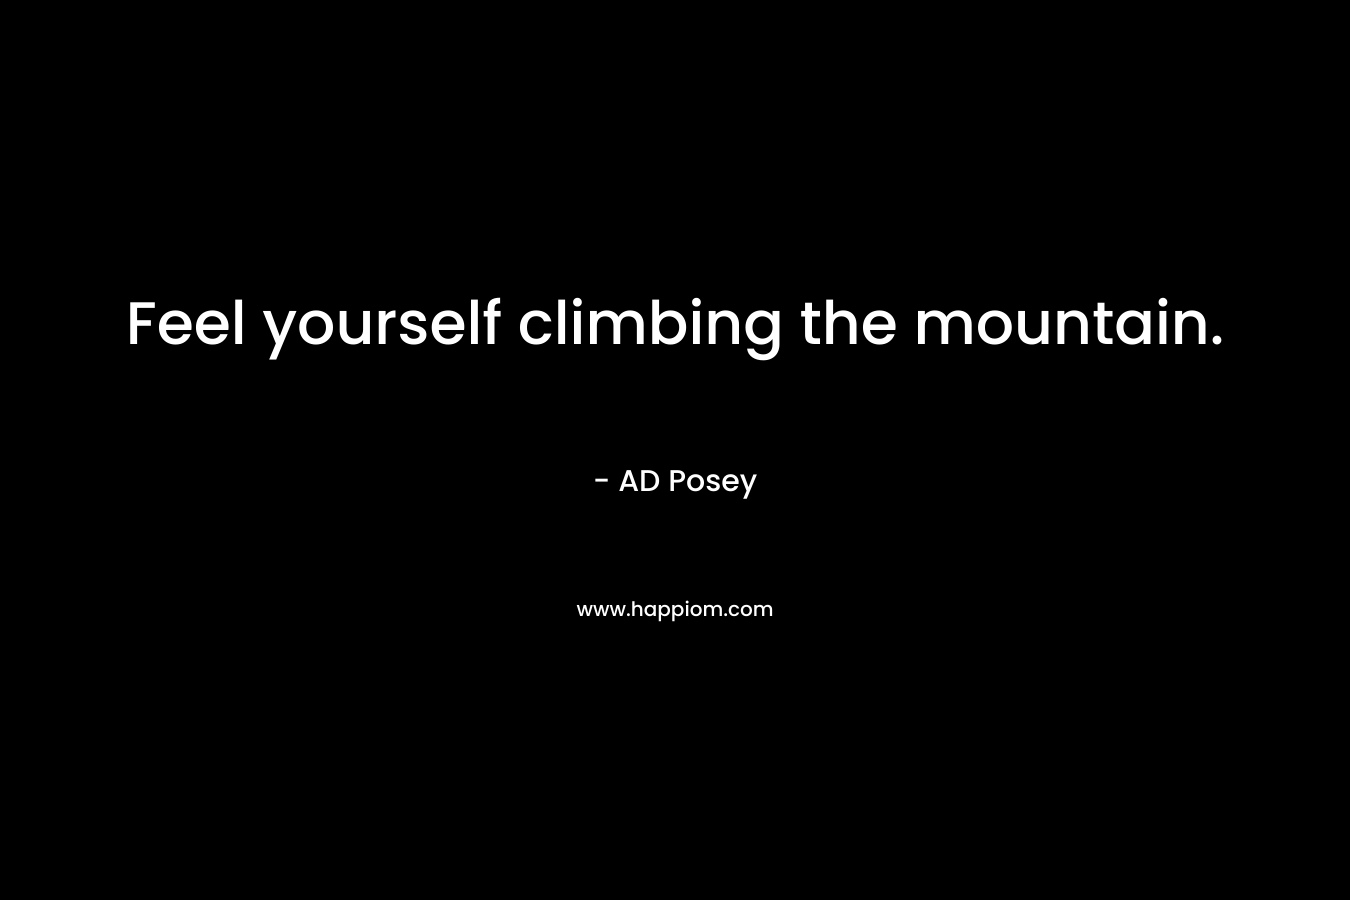 Feel yourself climbing the mountain.